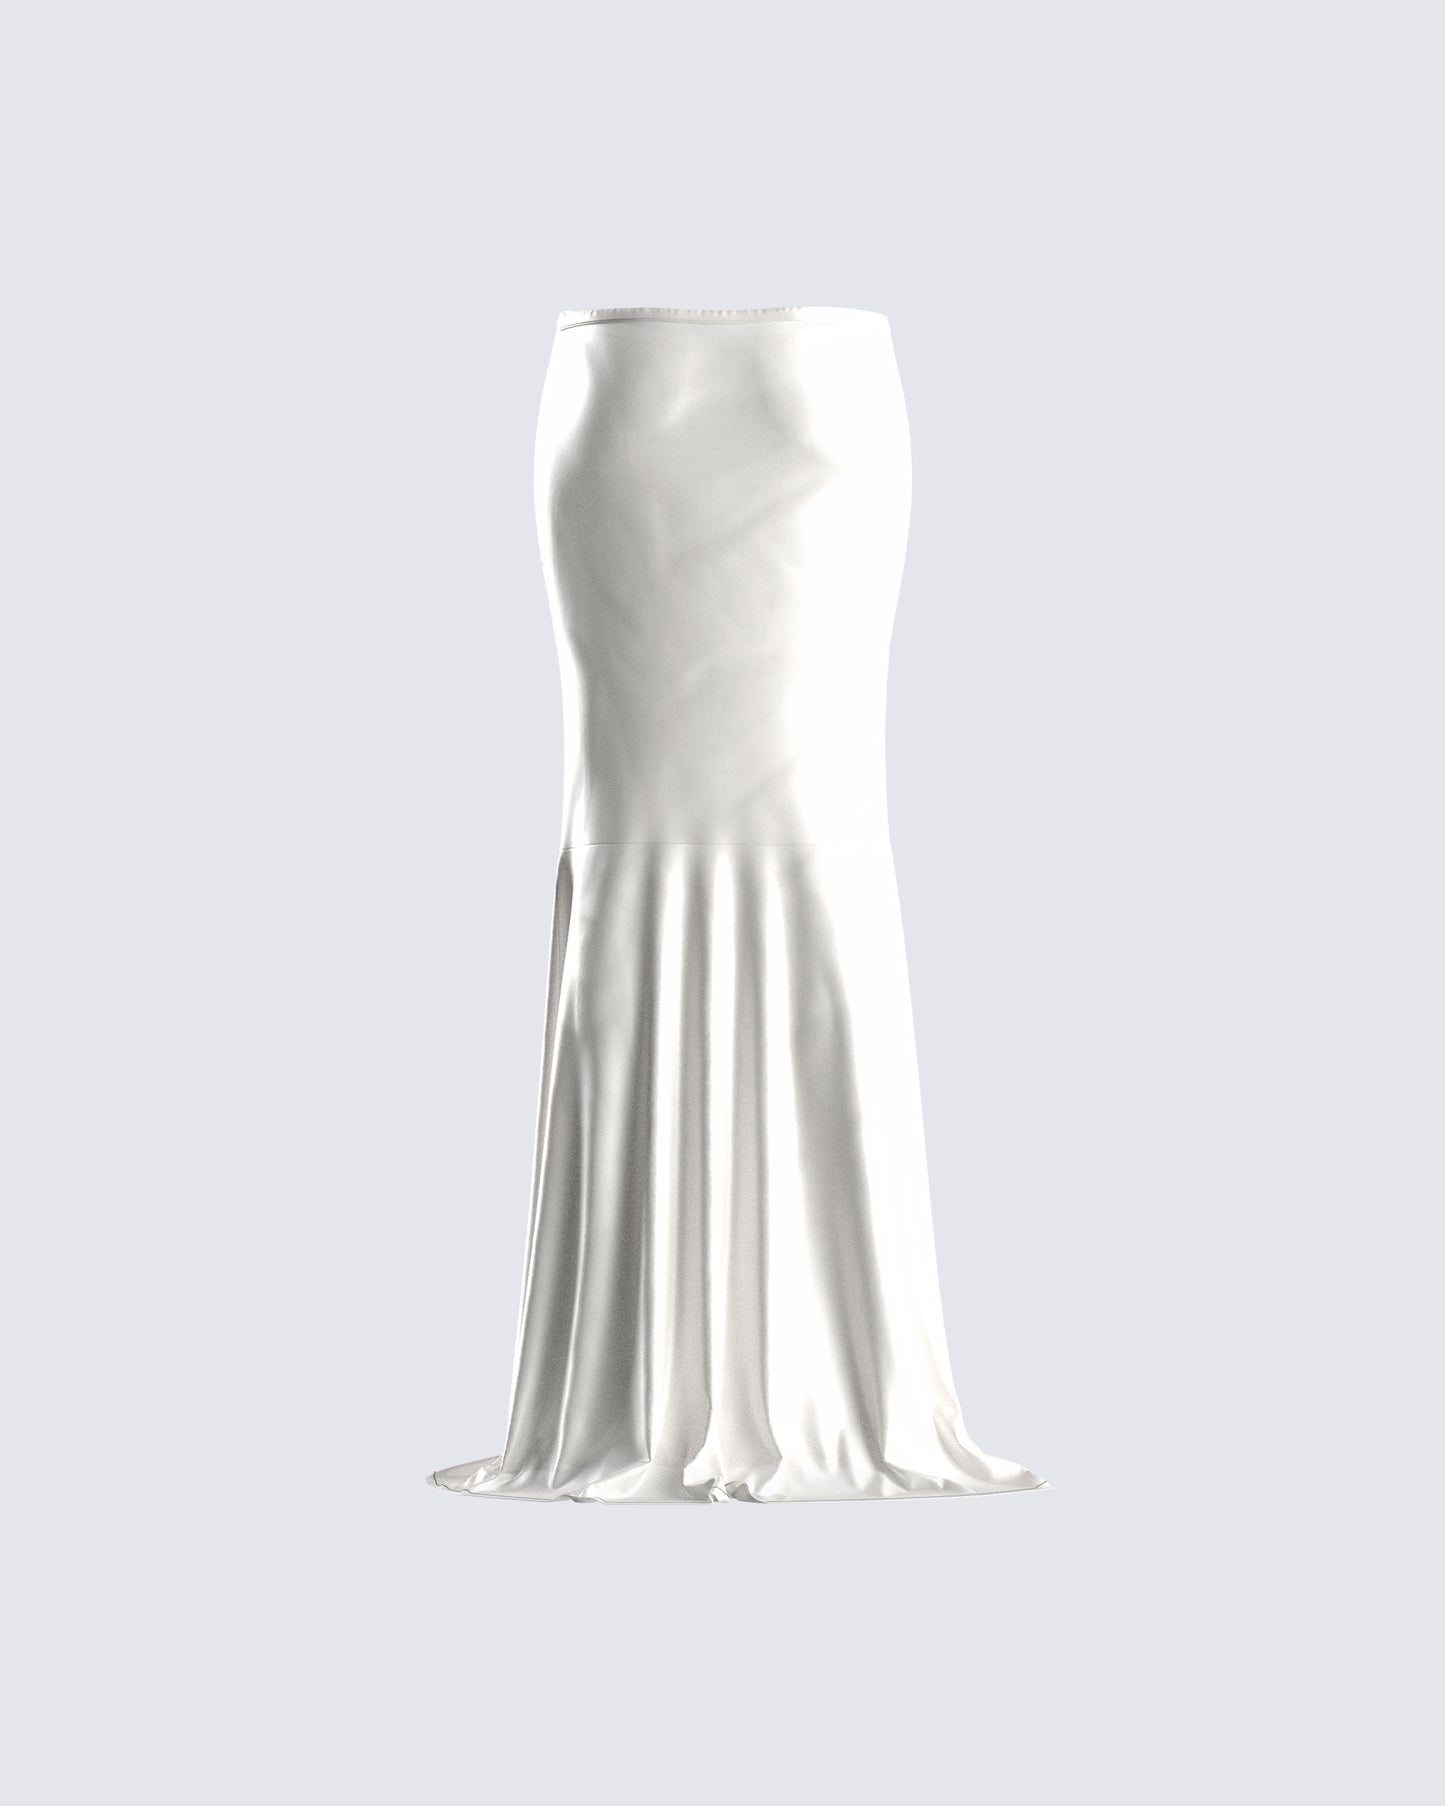 Minh White Satin Maxi Skirt